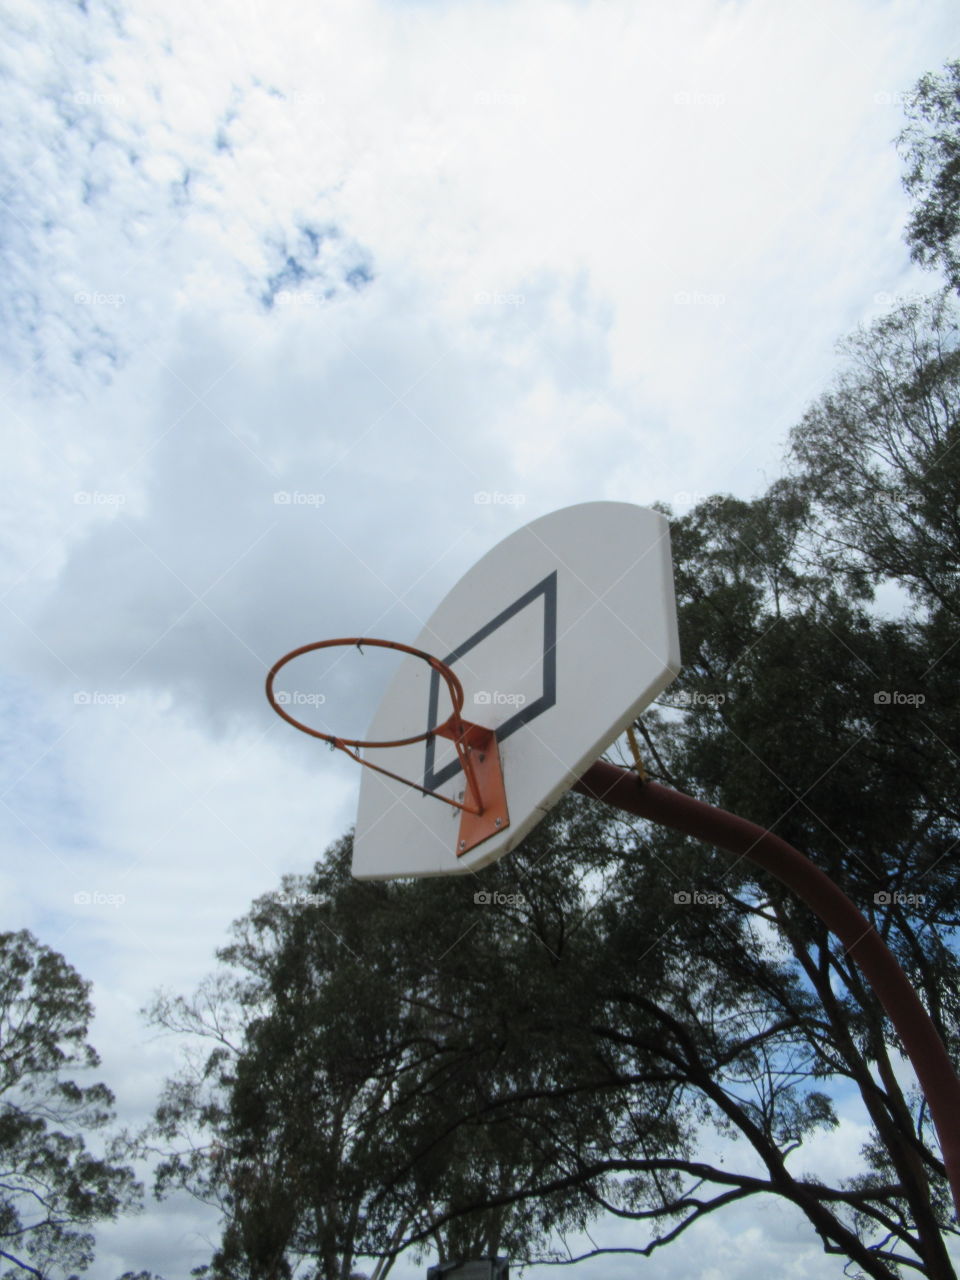 A simple photograph of a basketball hoop